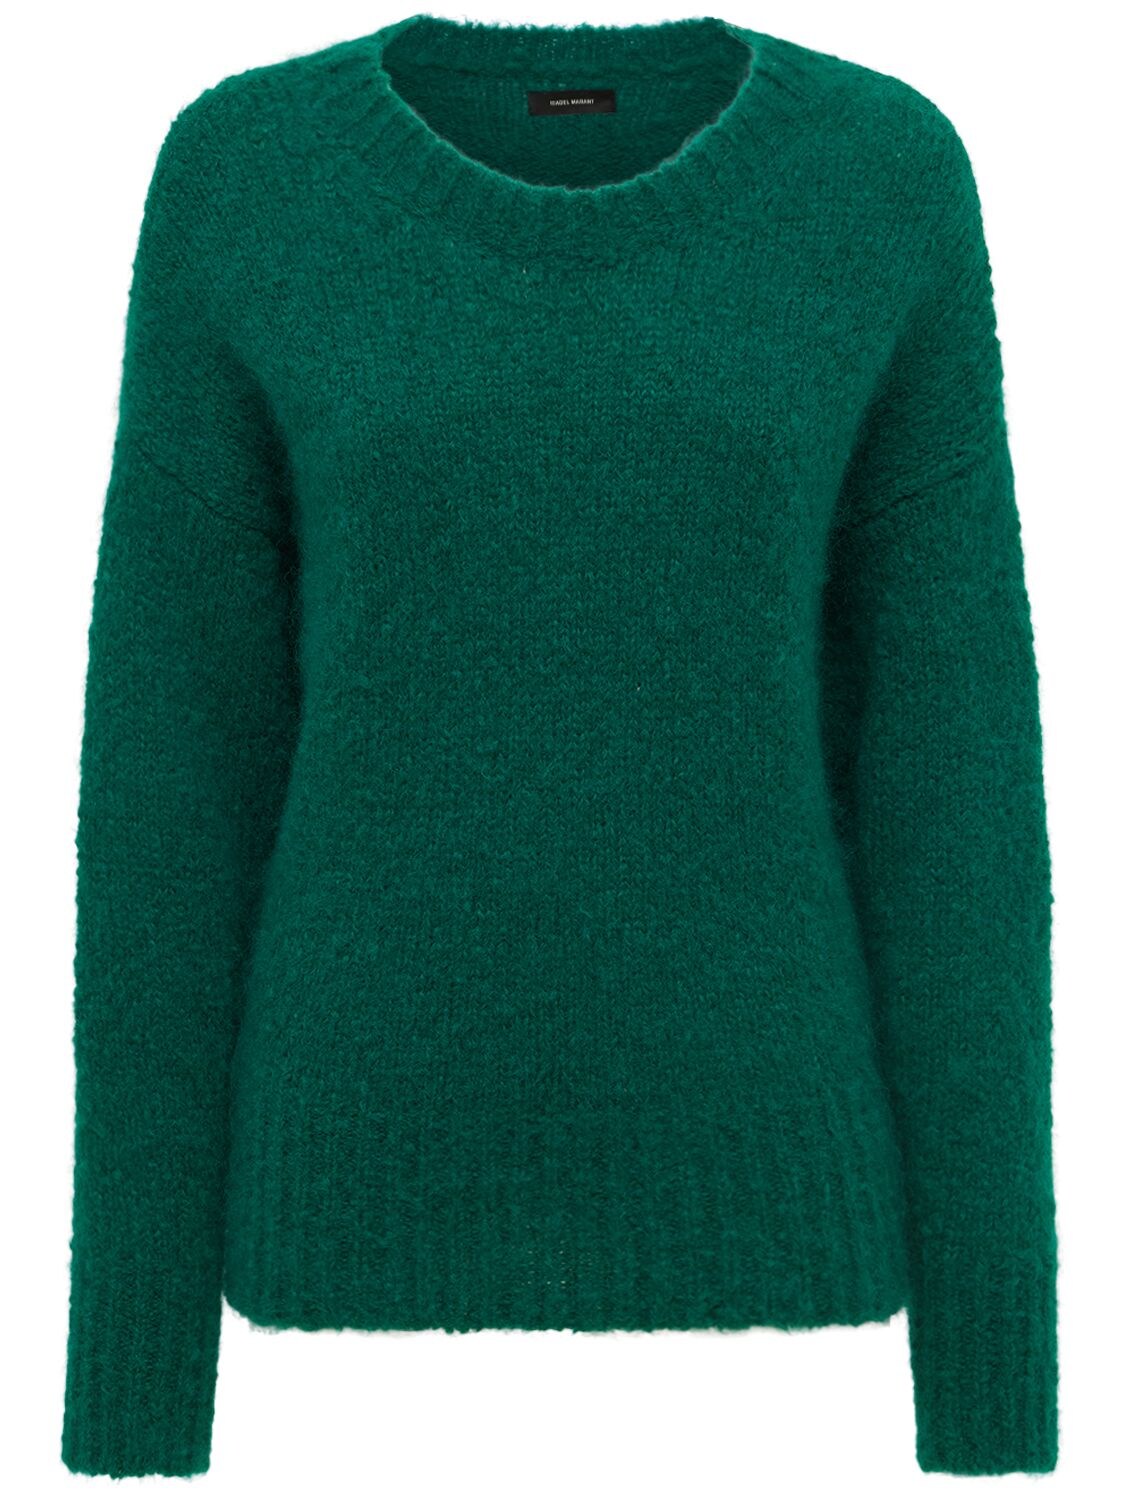 ISABEL MARANT Estelle Knit Mohair Blend Sweater